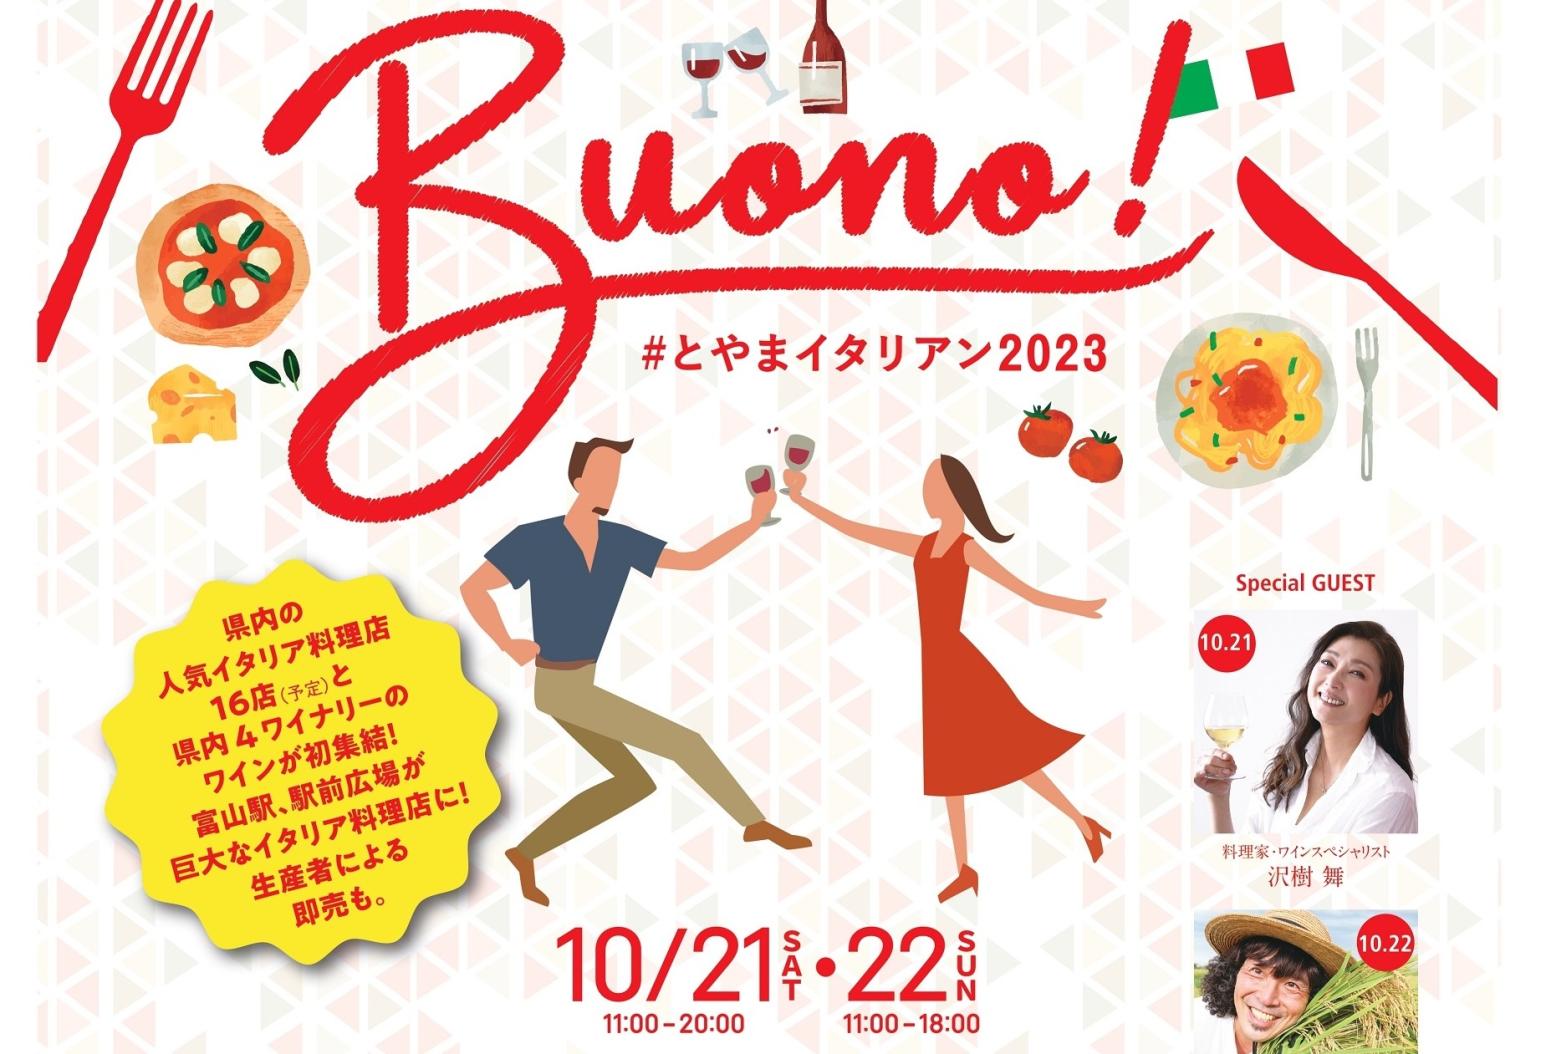 Buono!#とやまイタリアン2023-1